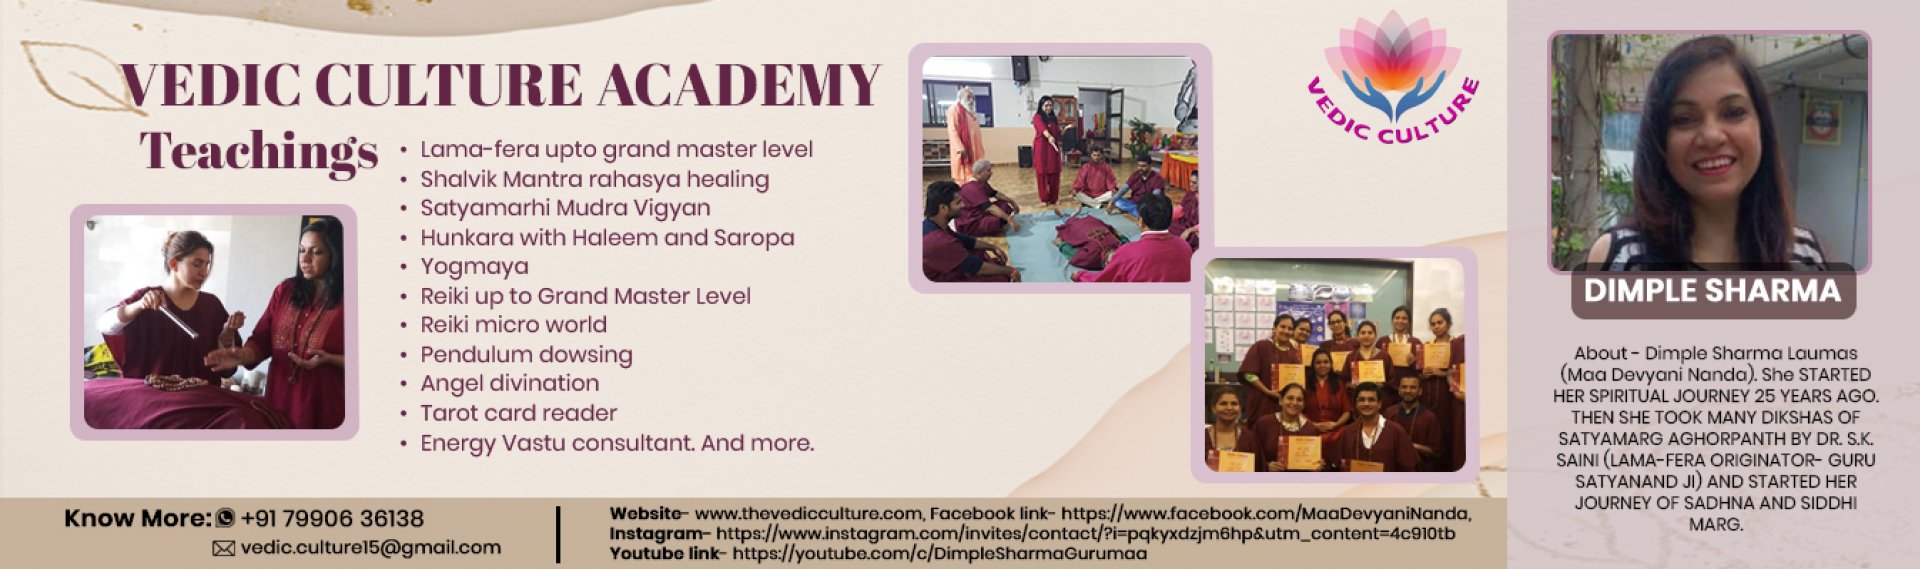 Vedic culture academy